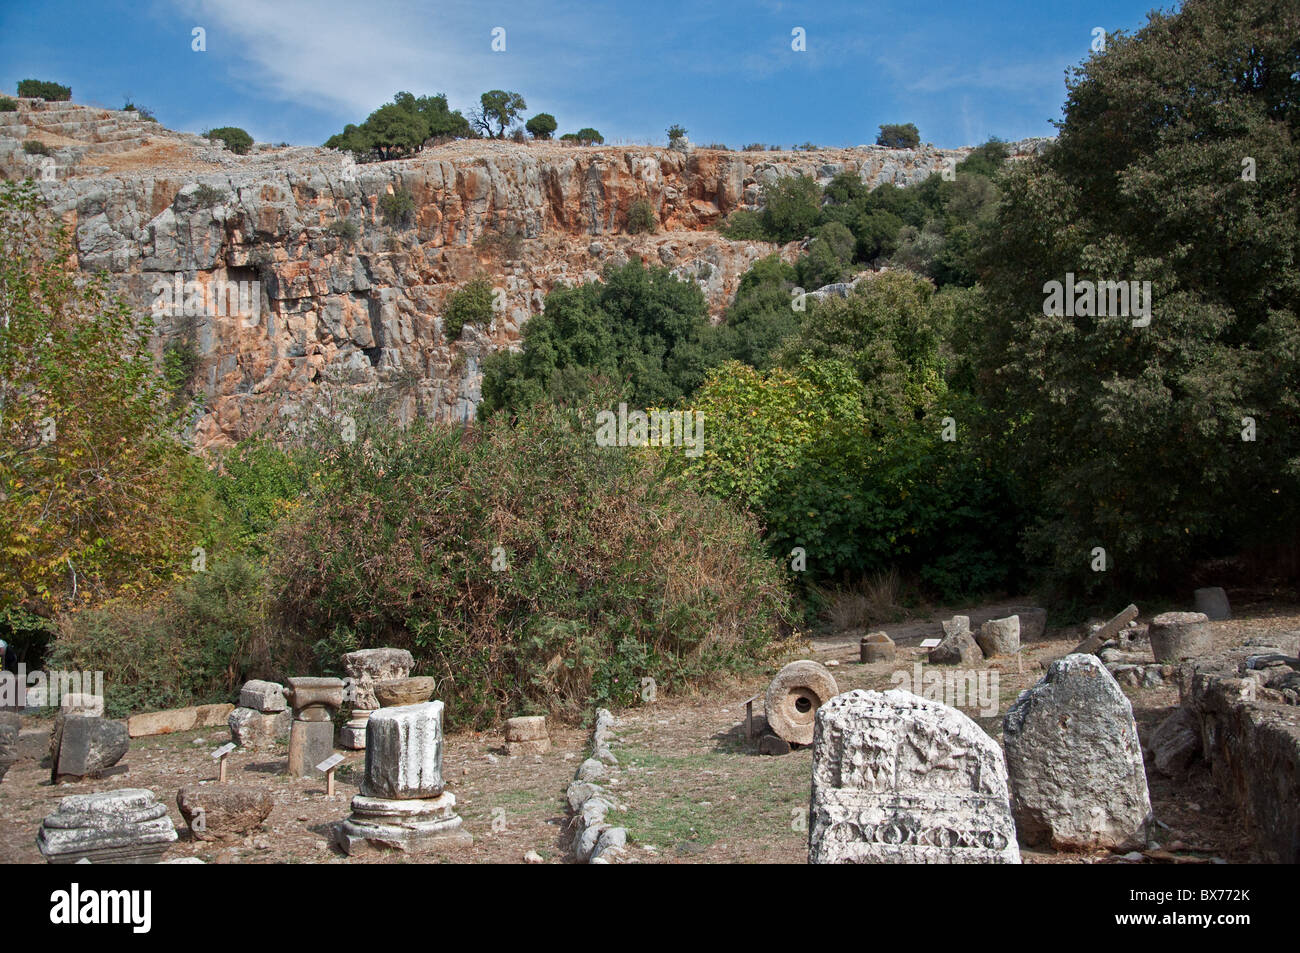 The abandoned city of Caesarea Philippi. Stock Photo